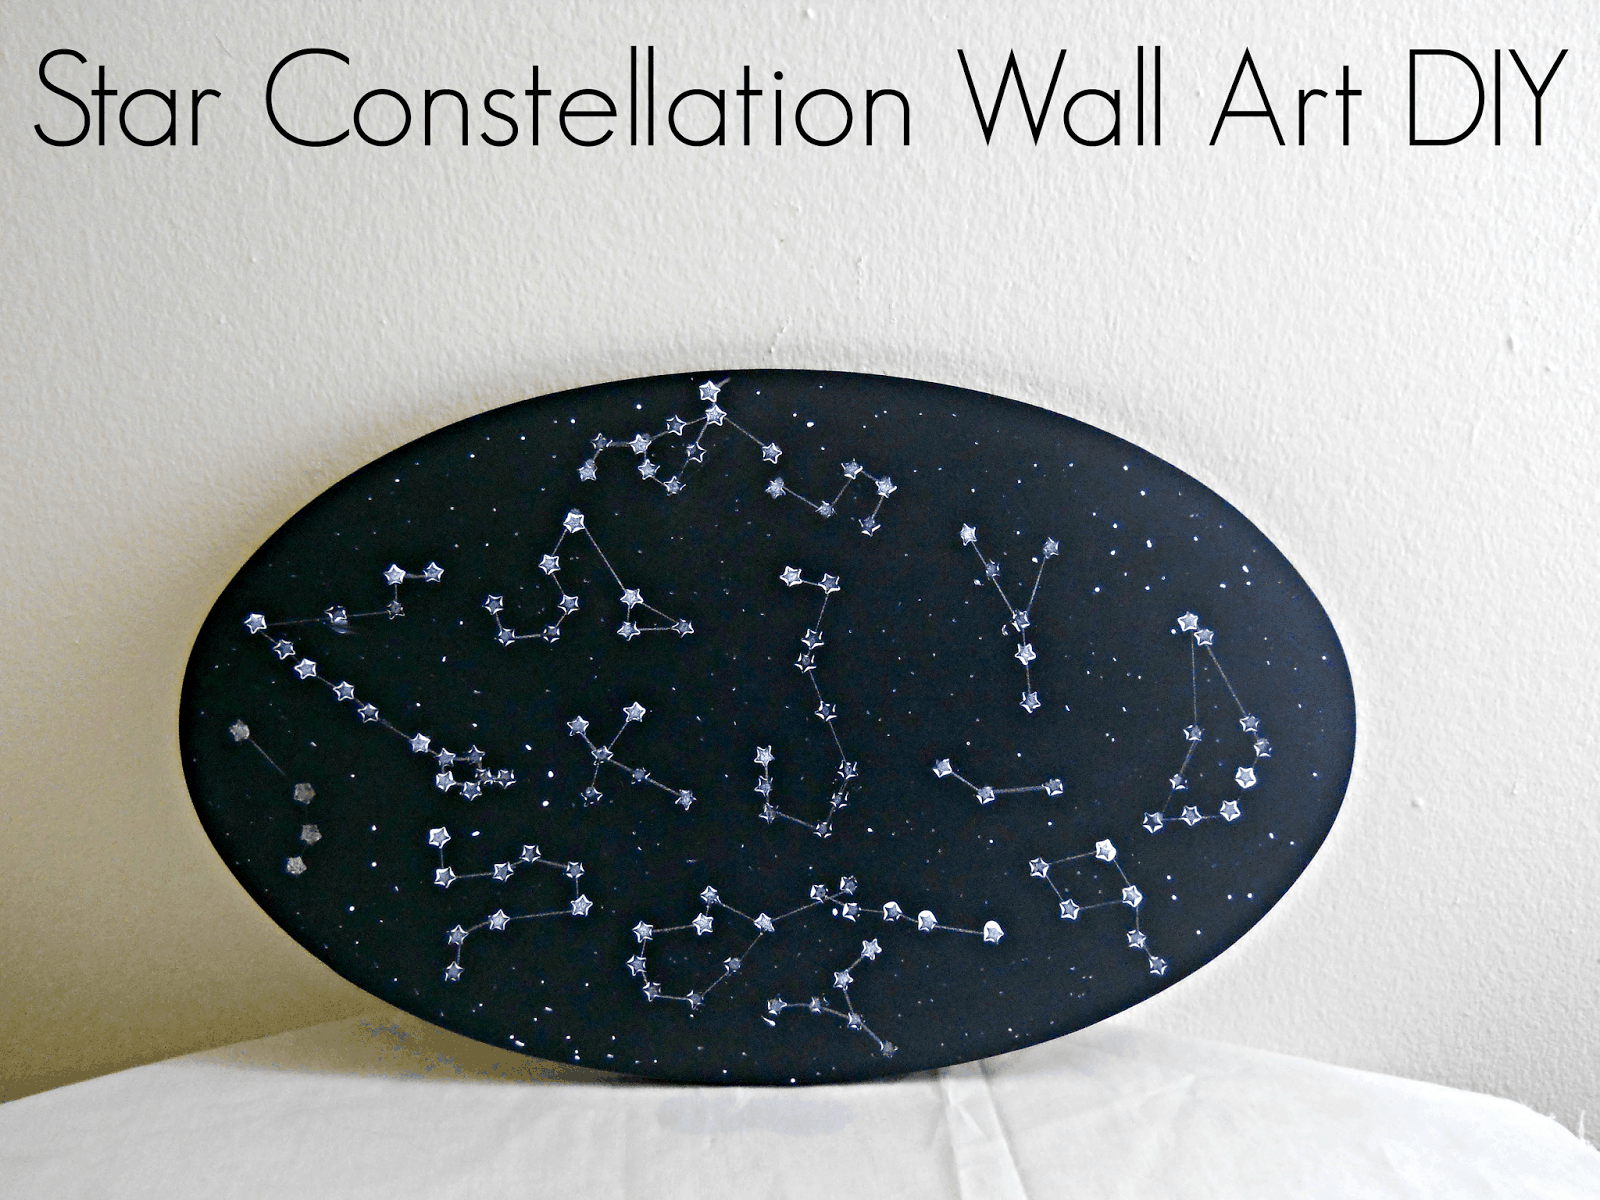 Hot glue constellation wall art